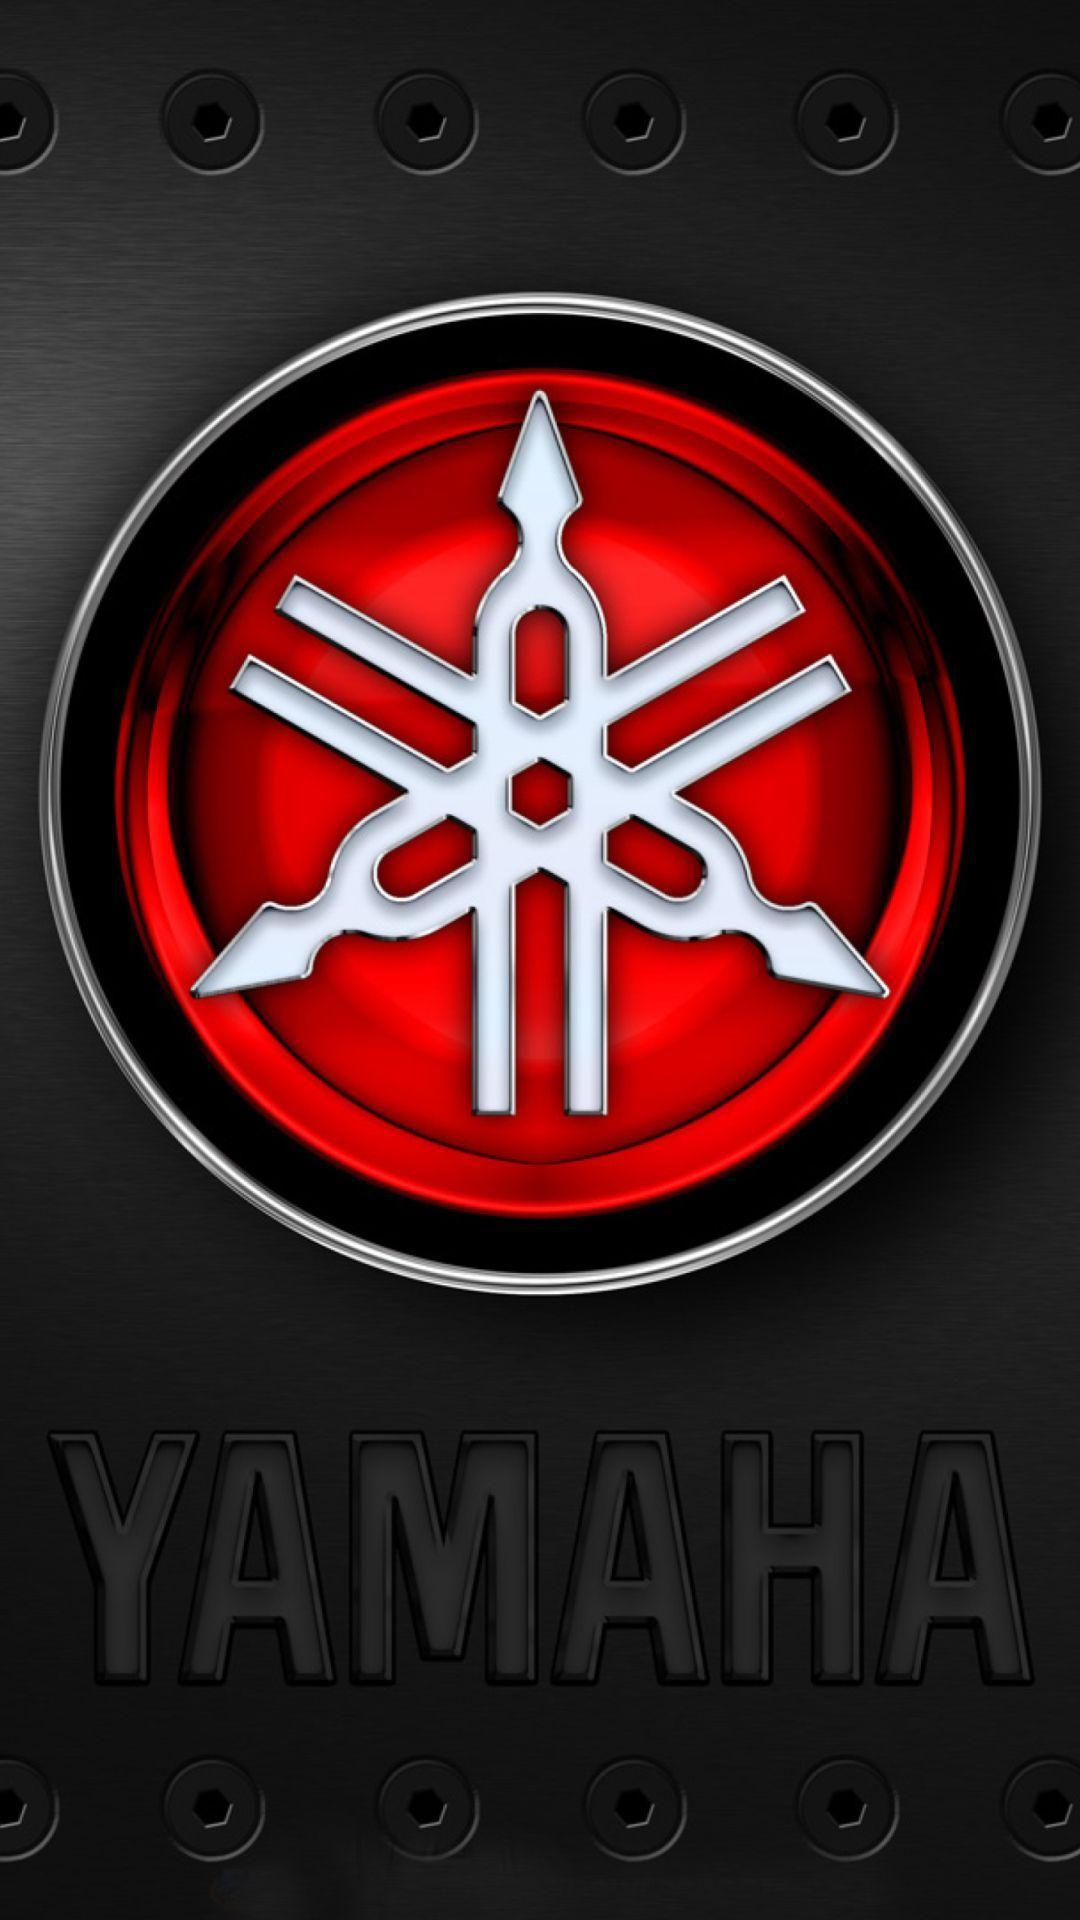 Yamaha Logo Wallpaper. Yamaha logo, Yamaha motocross, Yamaha racing